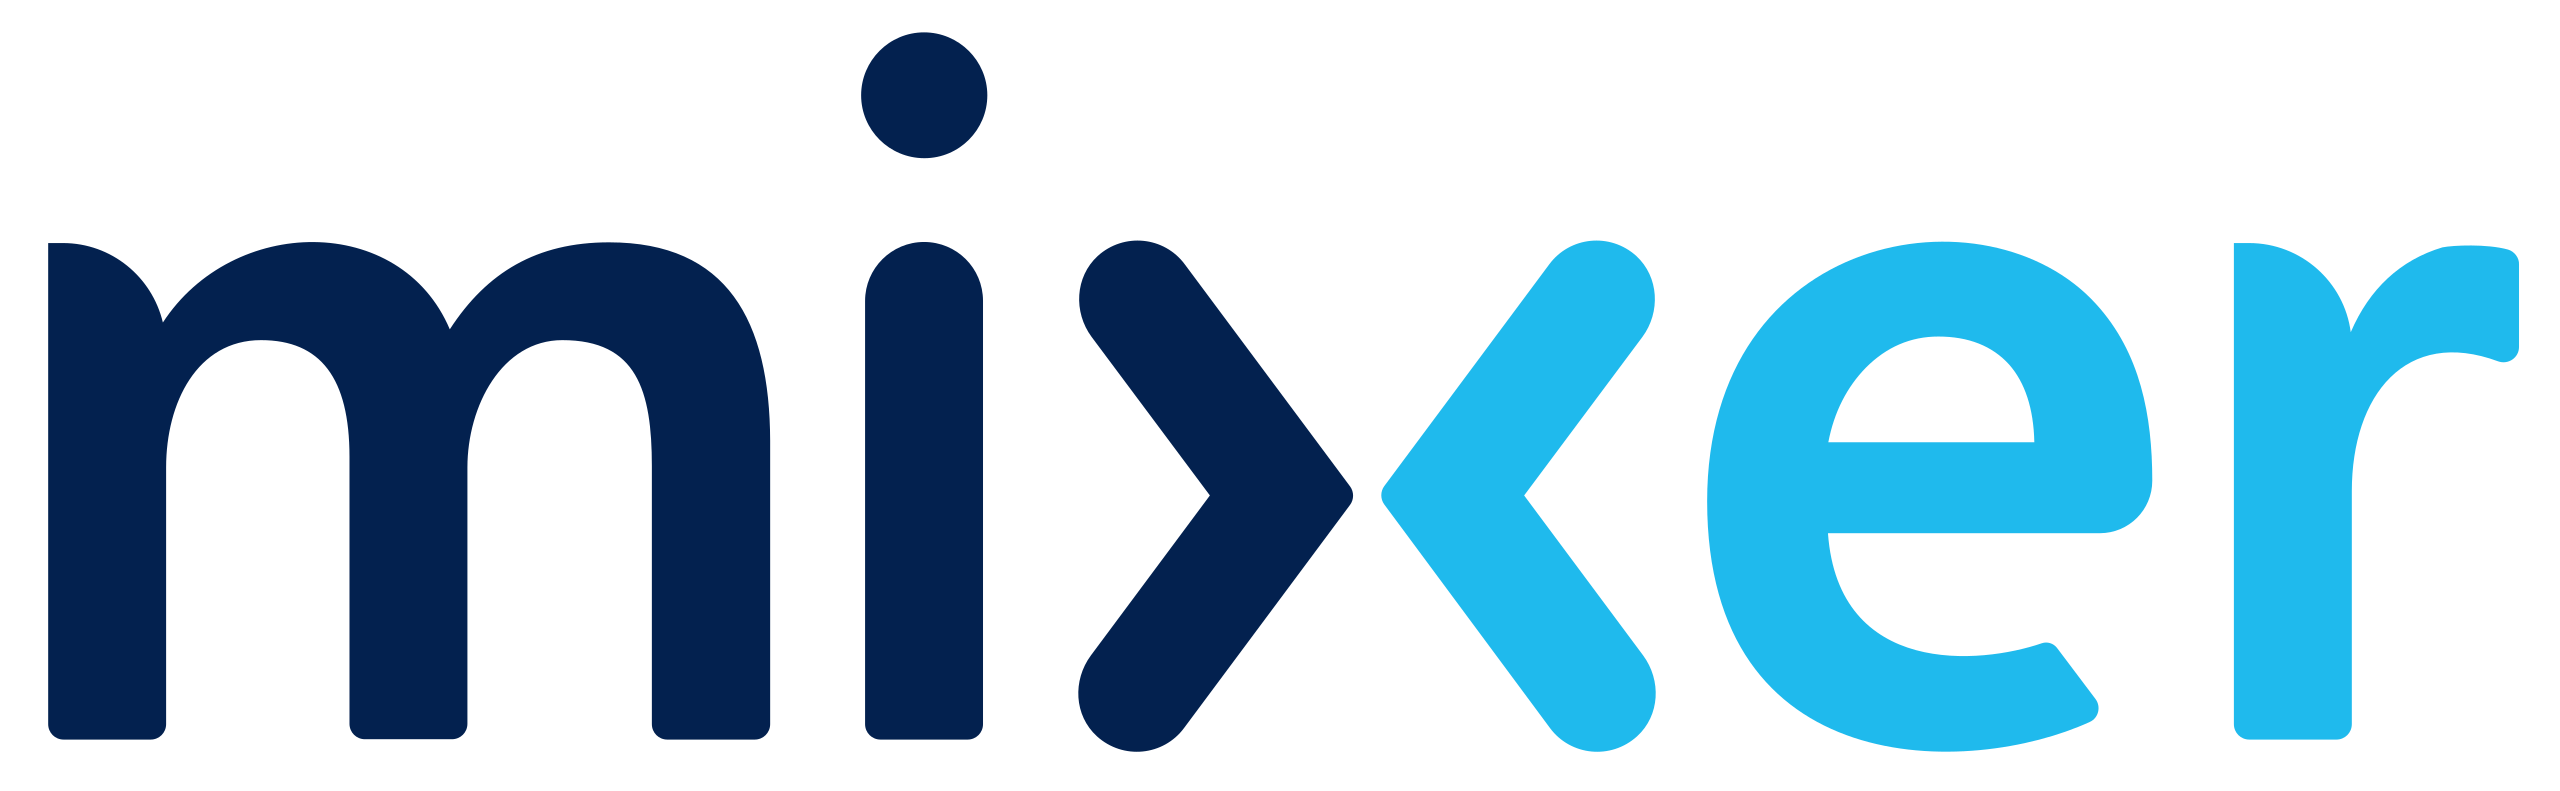 File:Mixer (website) logo.svg Wikimedia Commons